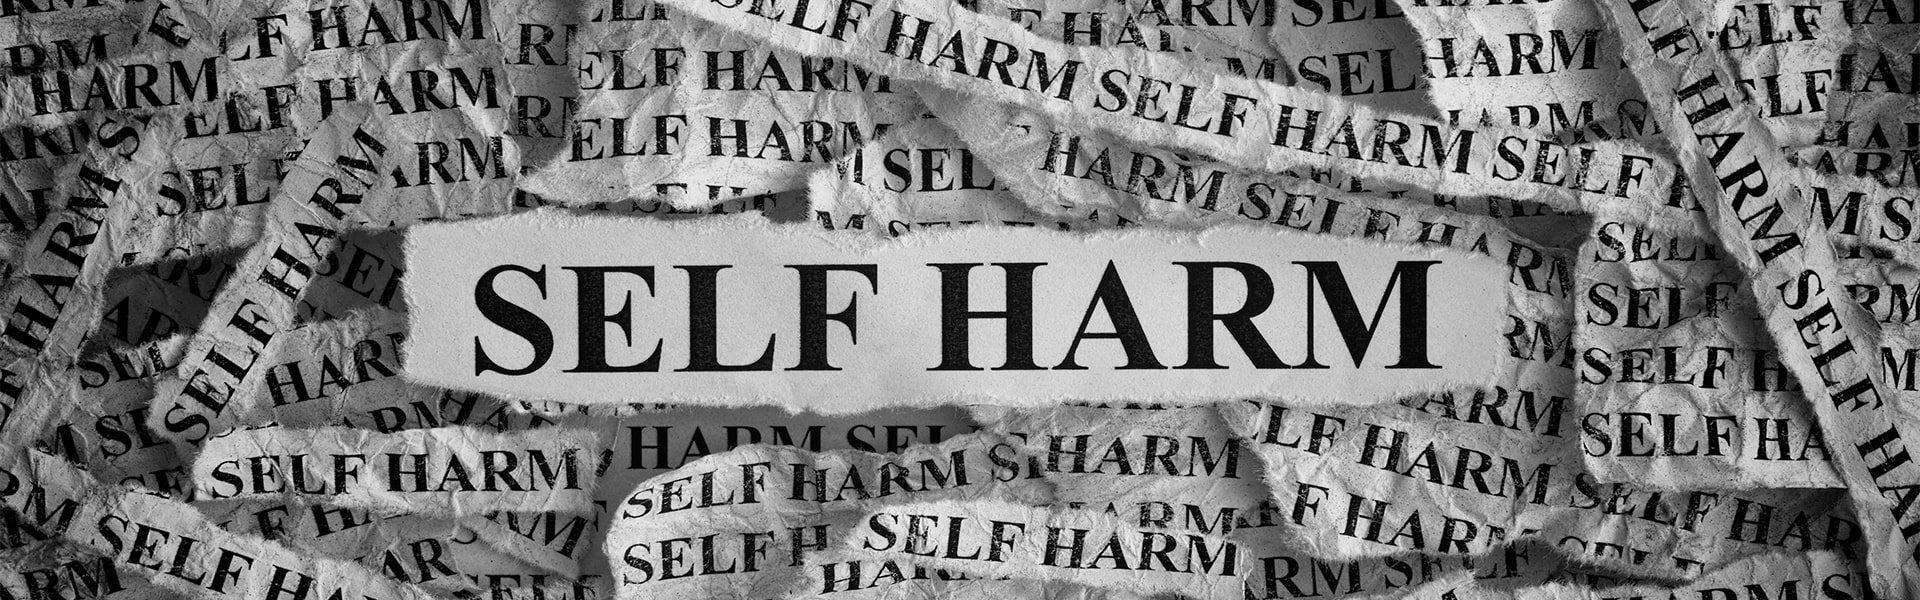 Self-Harm and Suicidality